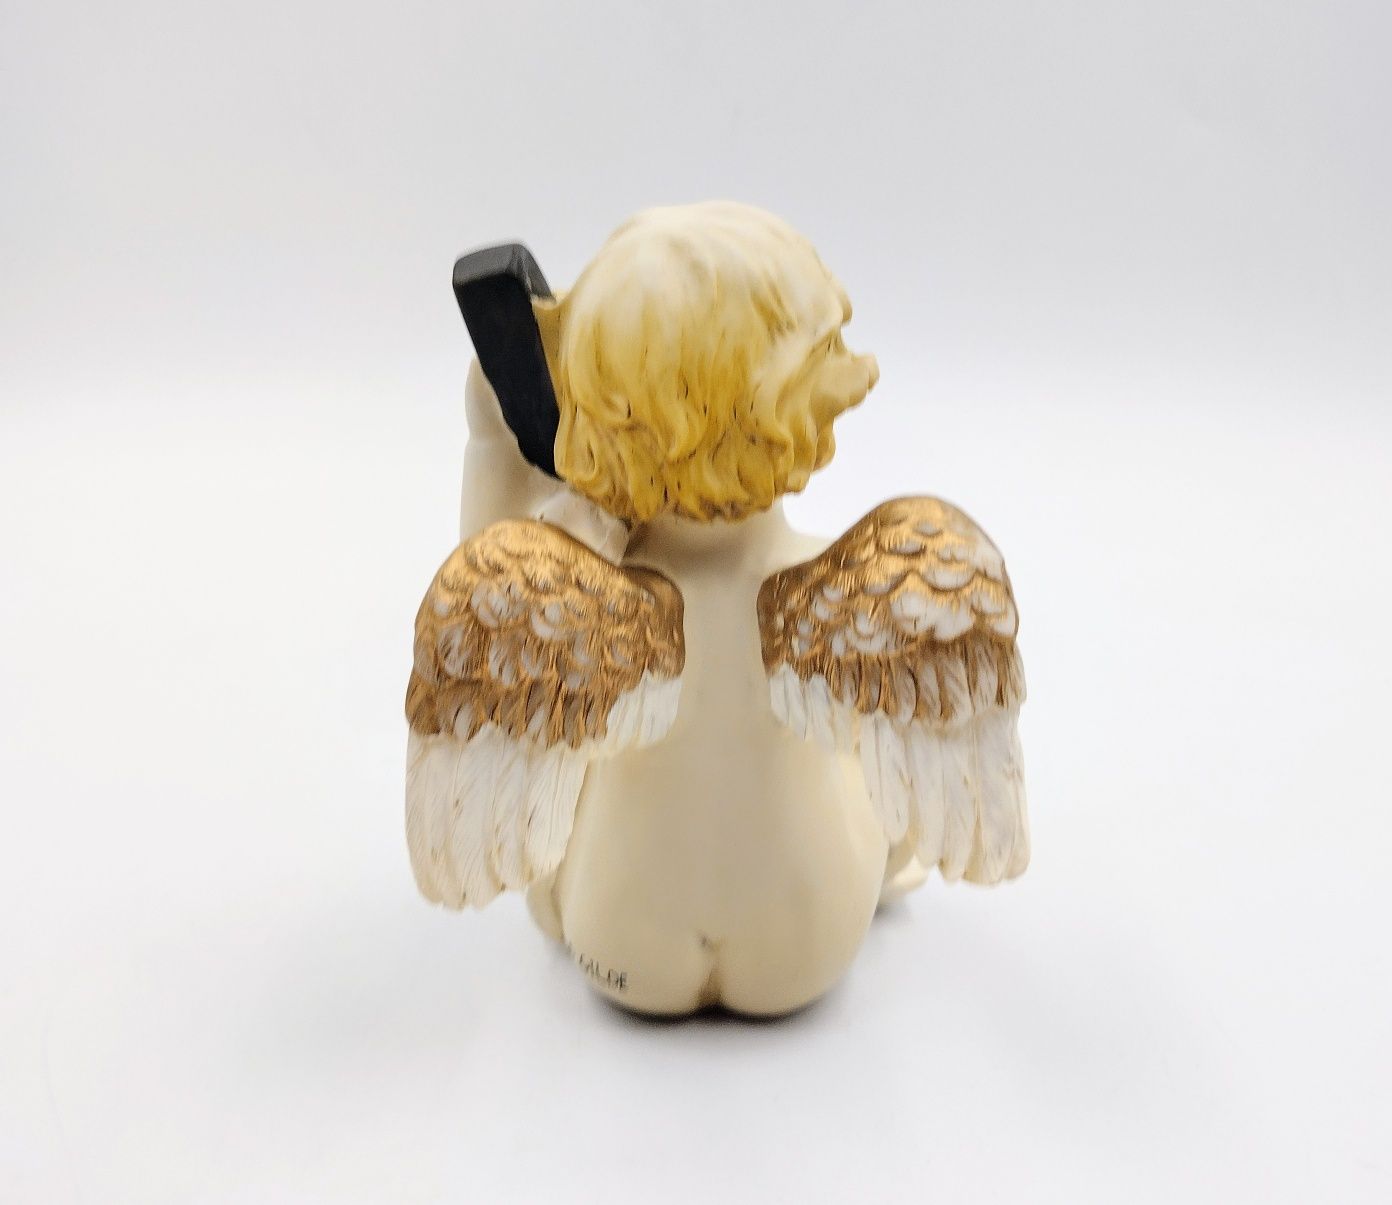 Anioł figurka aniołek Gilde Handwerk sygnowana retro vintage amorek